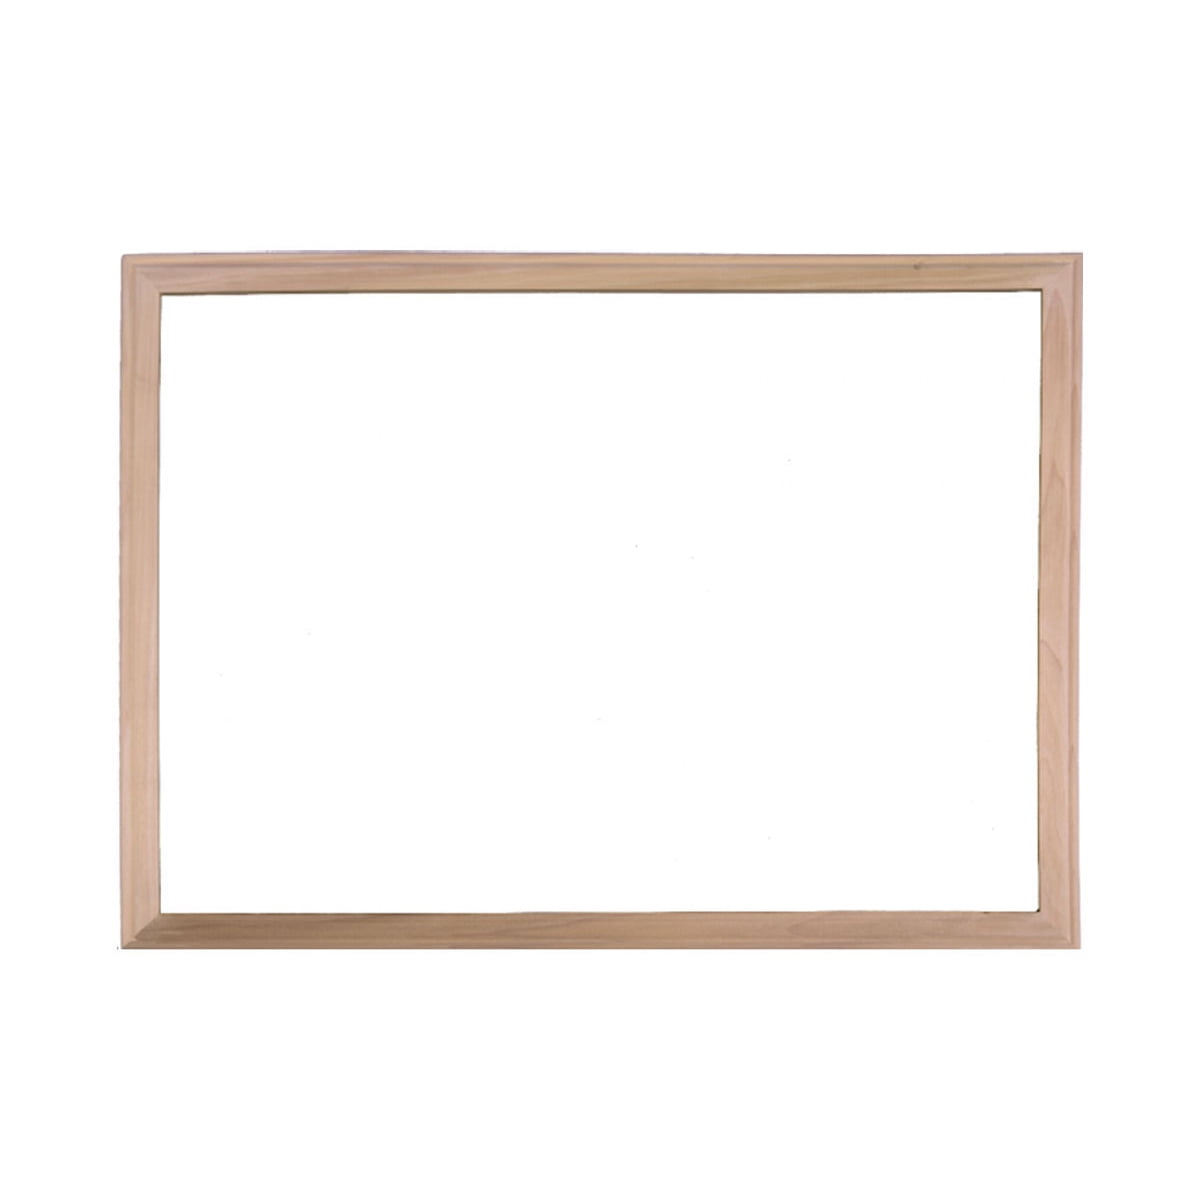 36 X 48 Wood Frame